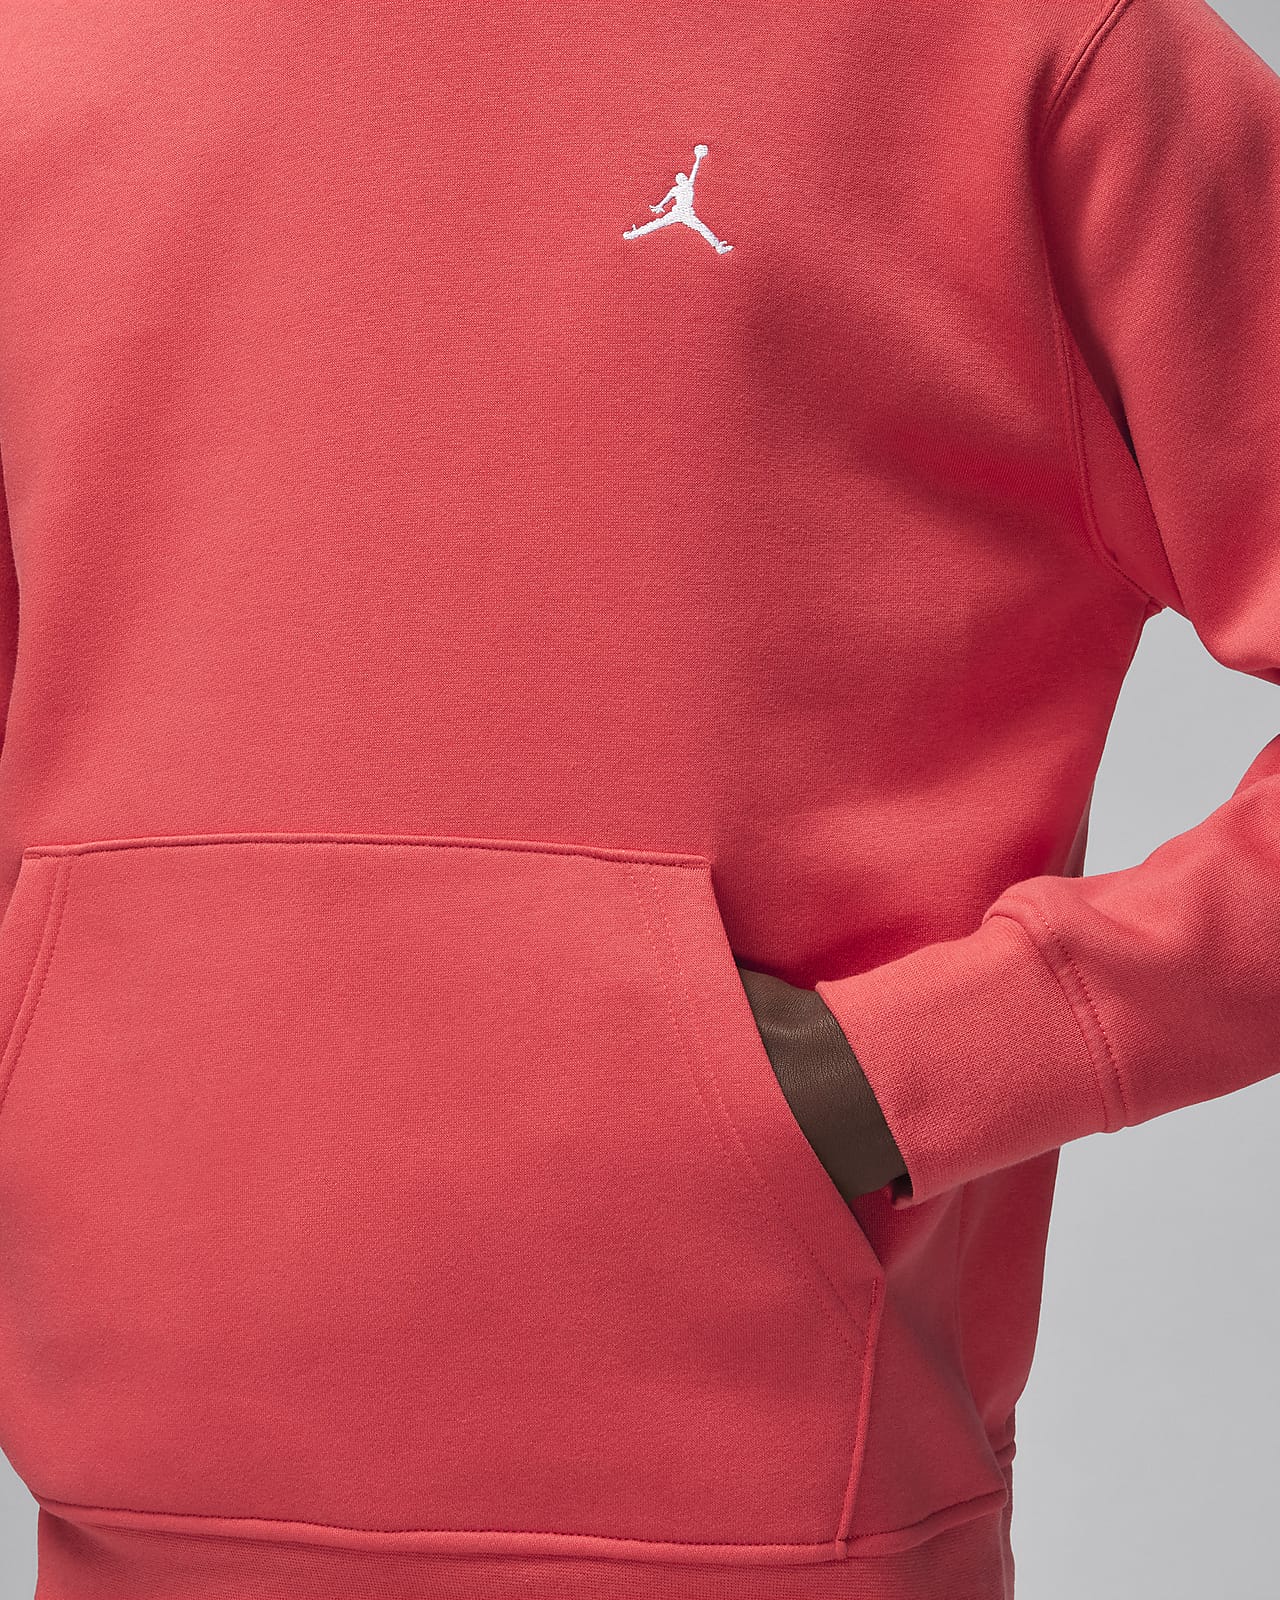 Jordan Essentials Fleece Pullover Mens Hoodie Red FJ7774-687